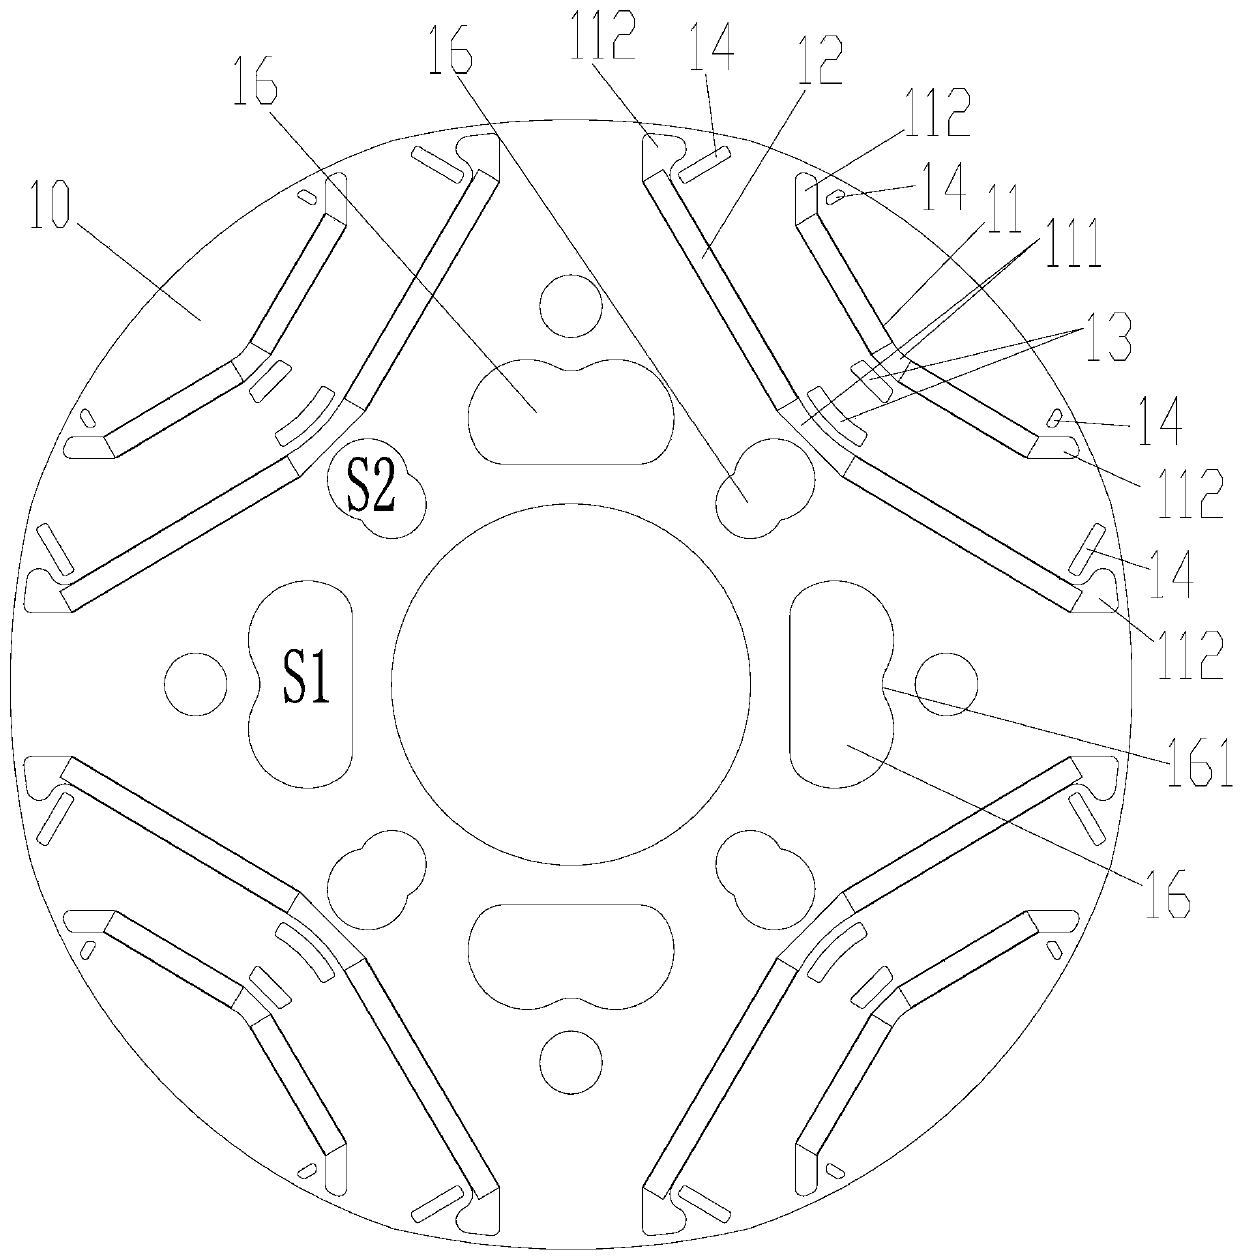 Motor rotor, motor and compressor